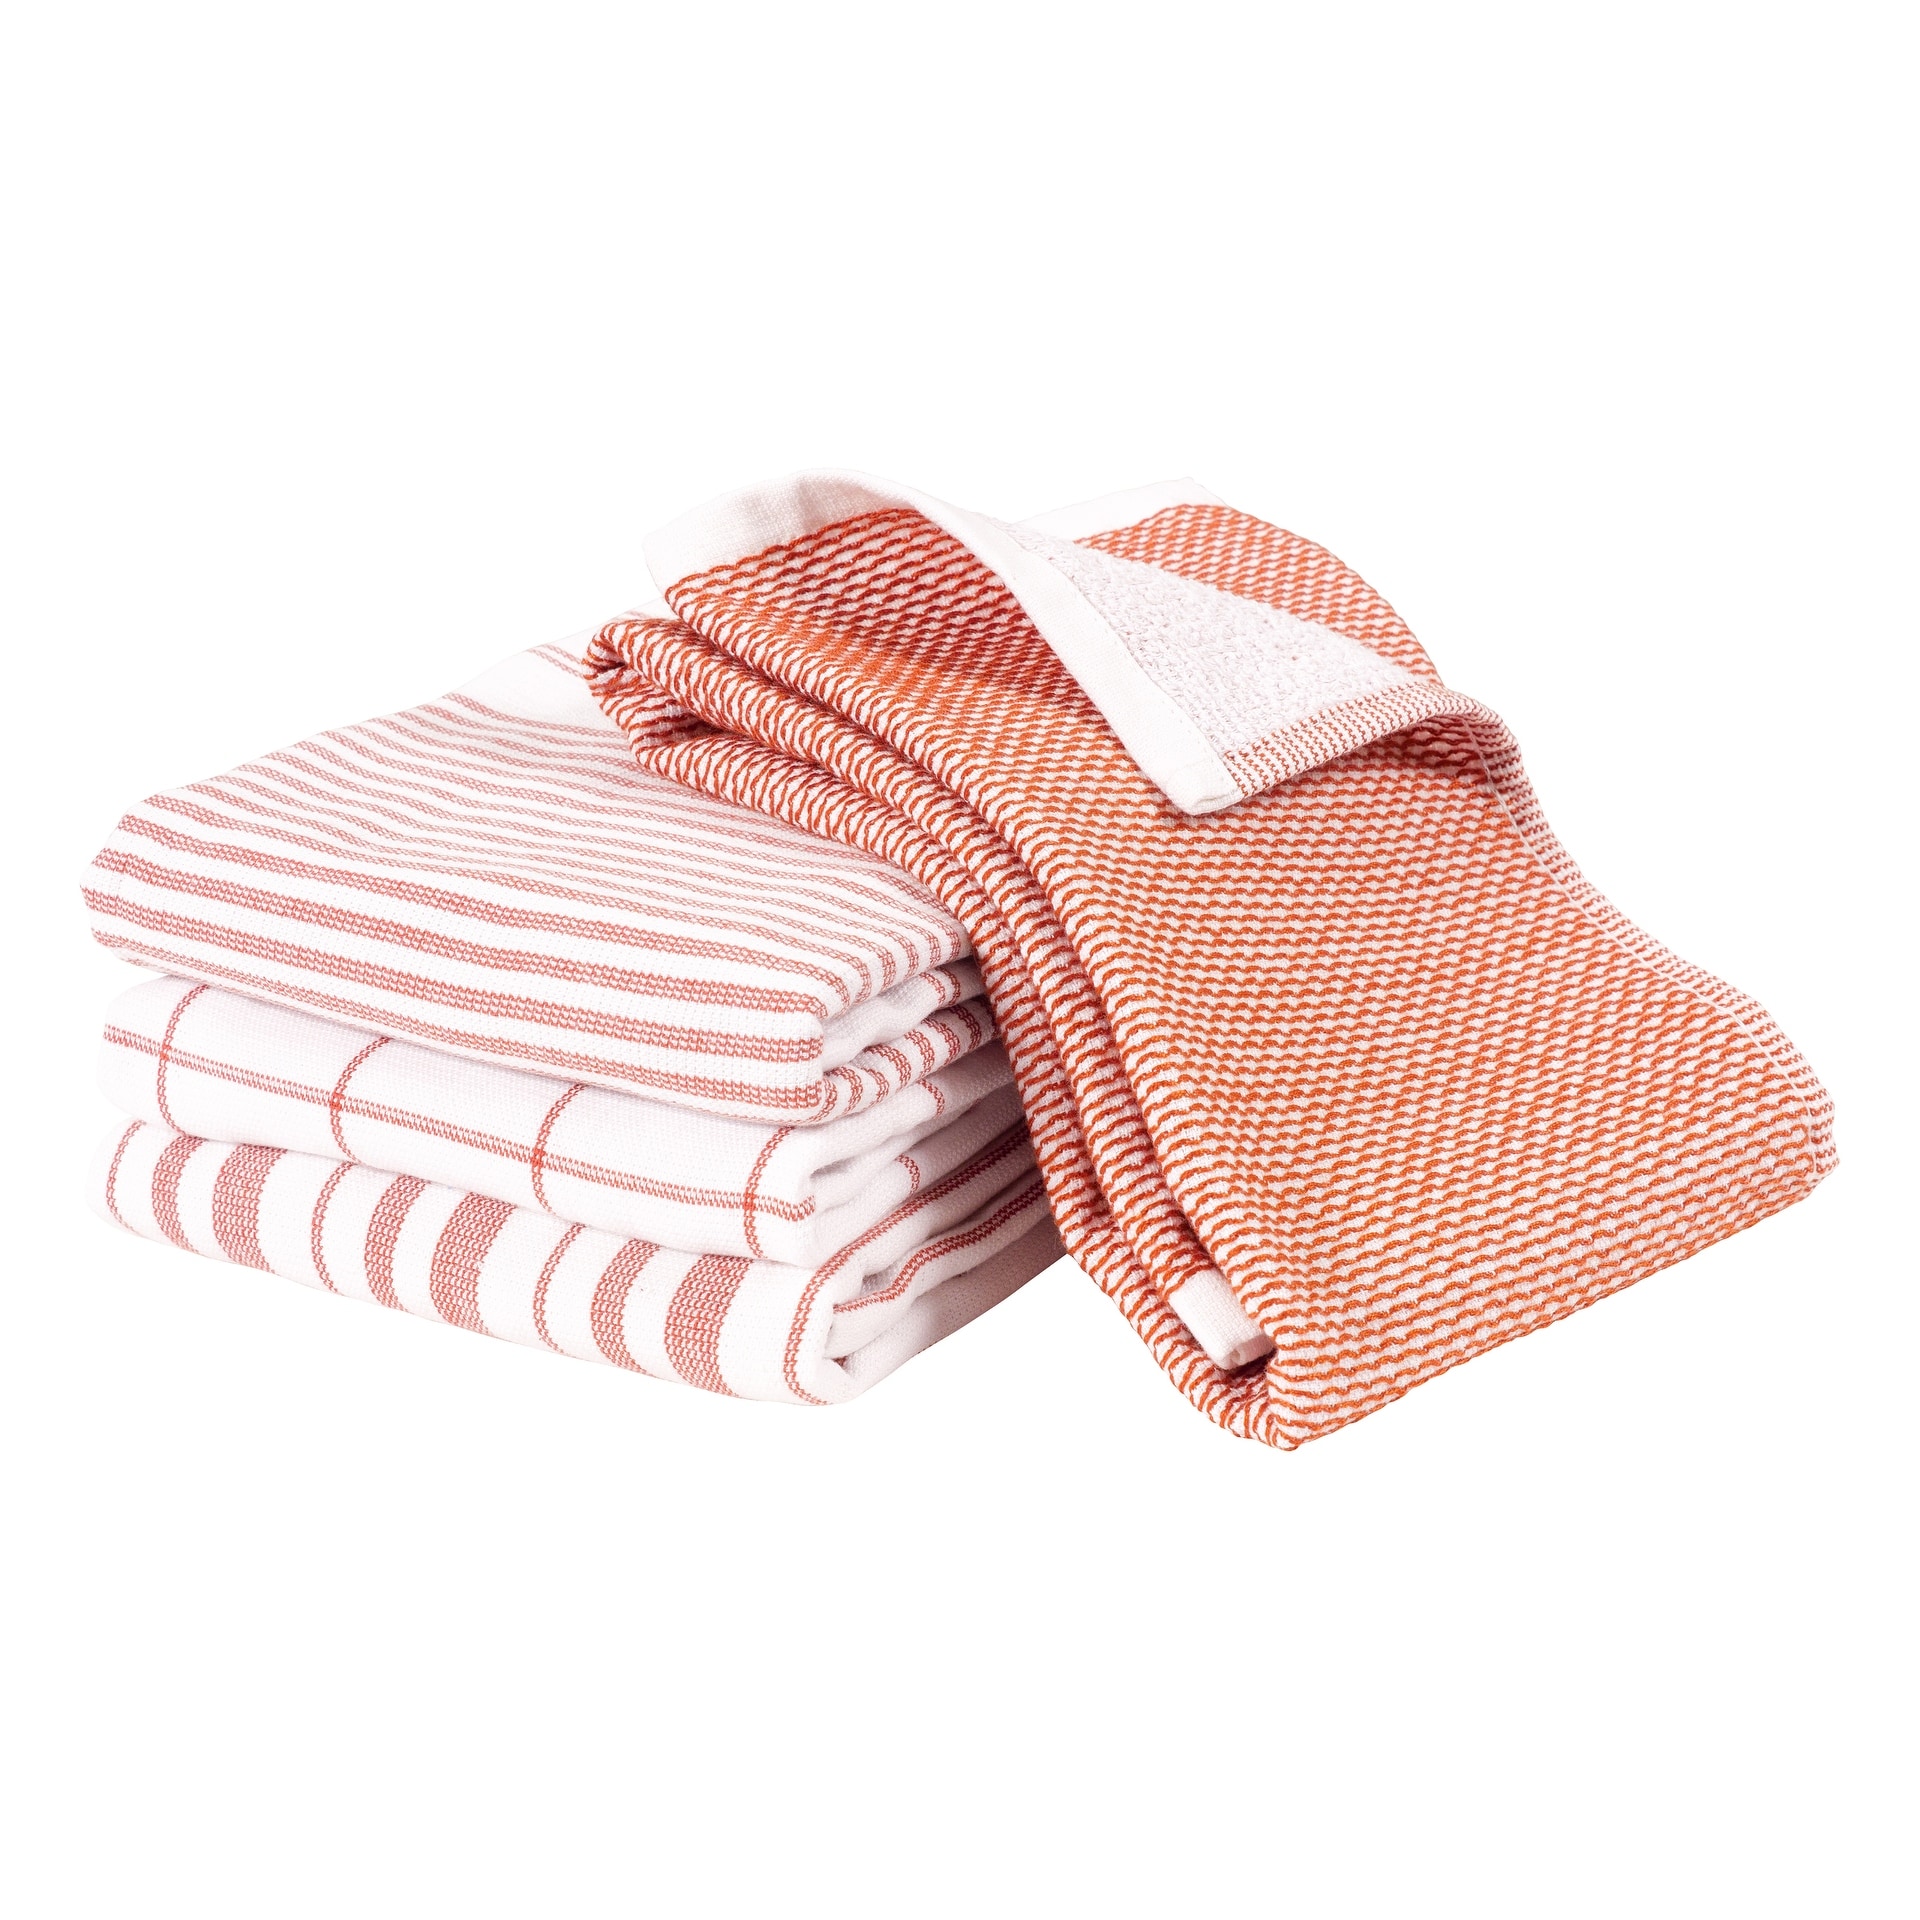 Channel Kitchen Towel & Cloth Set